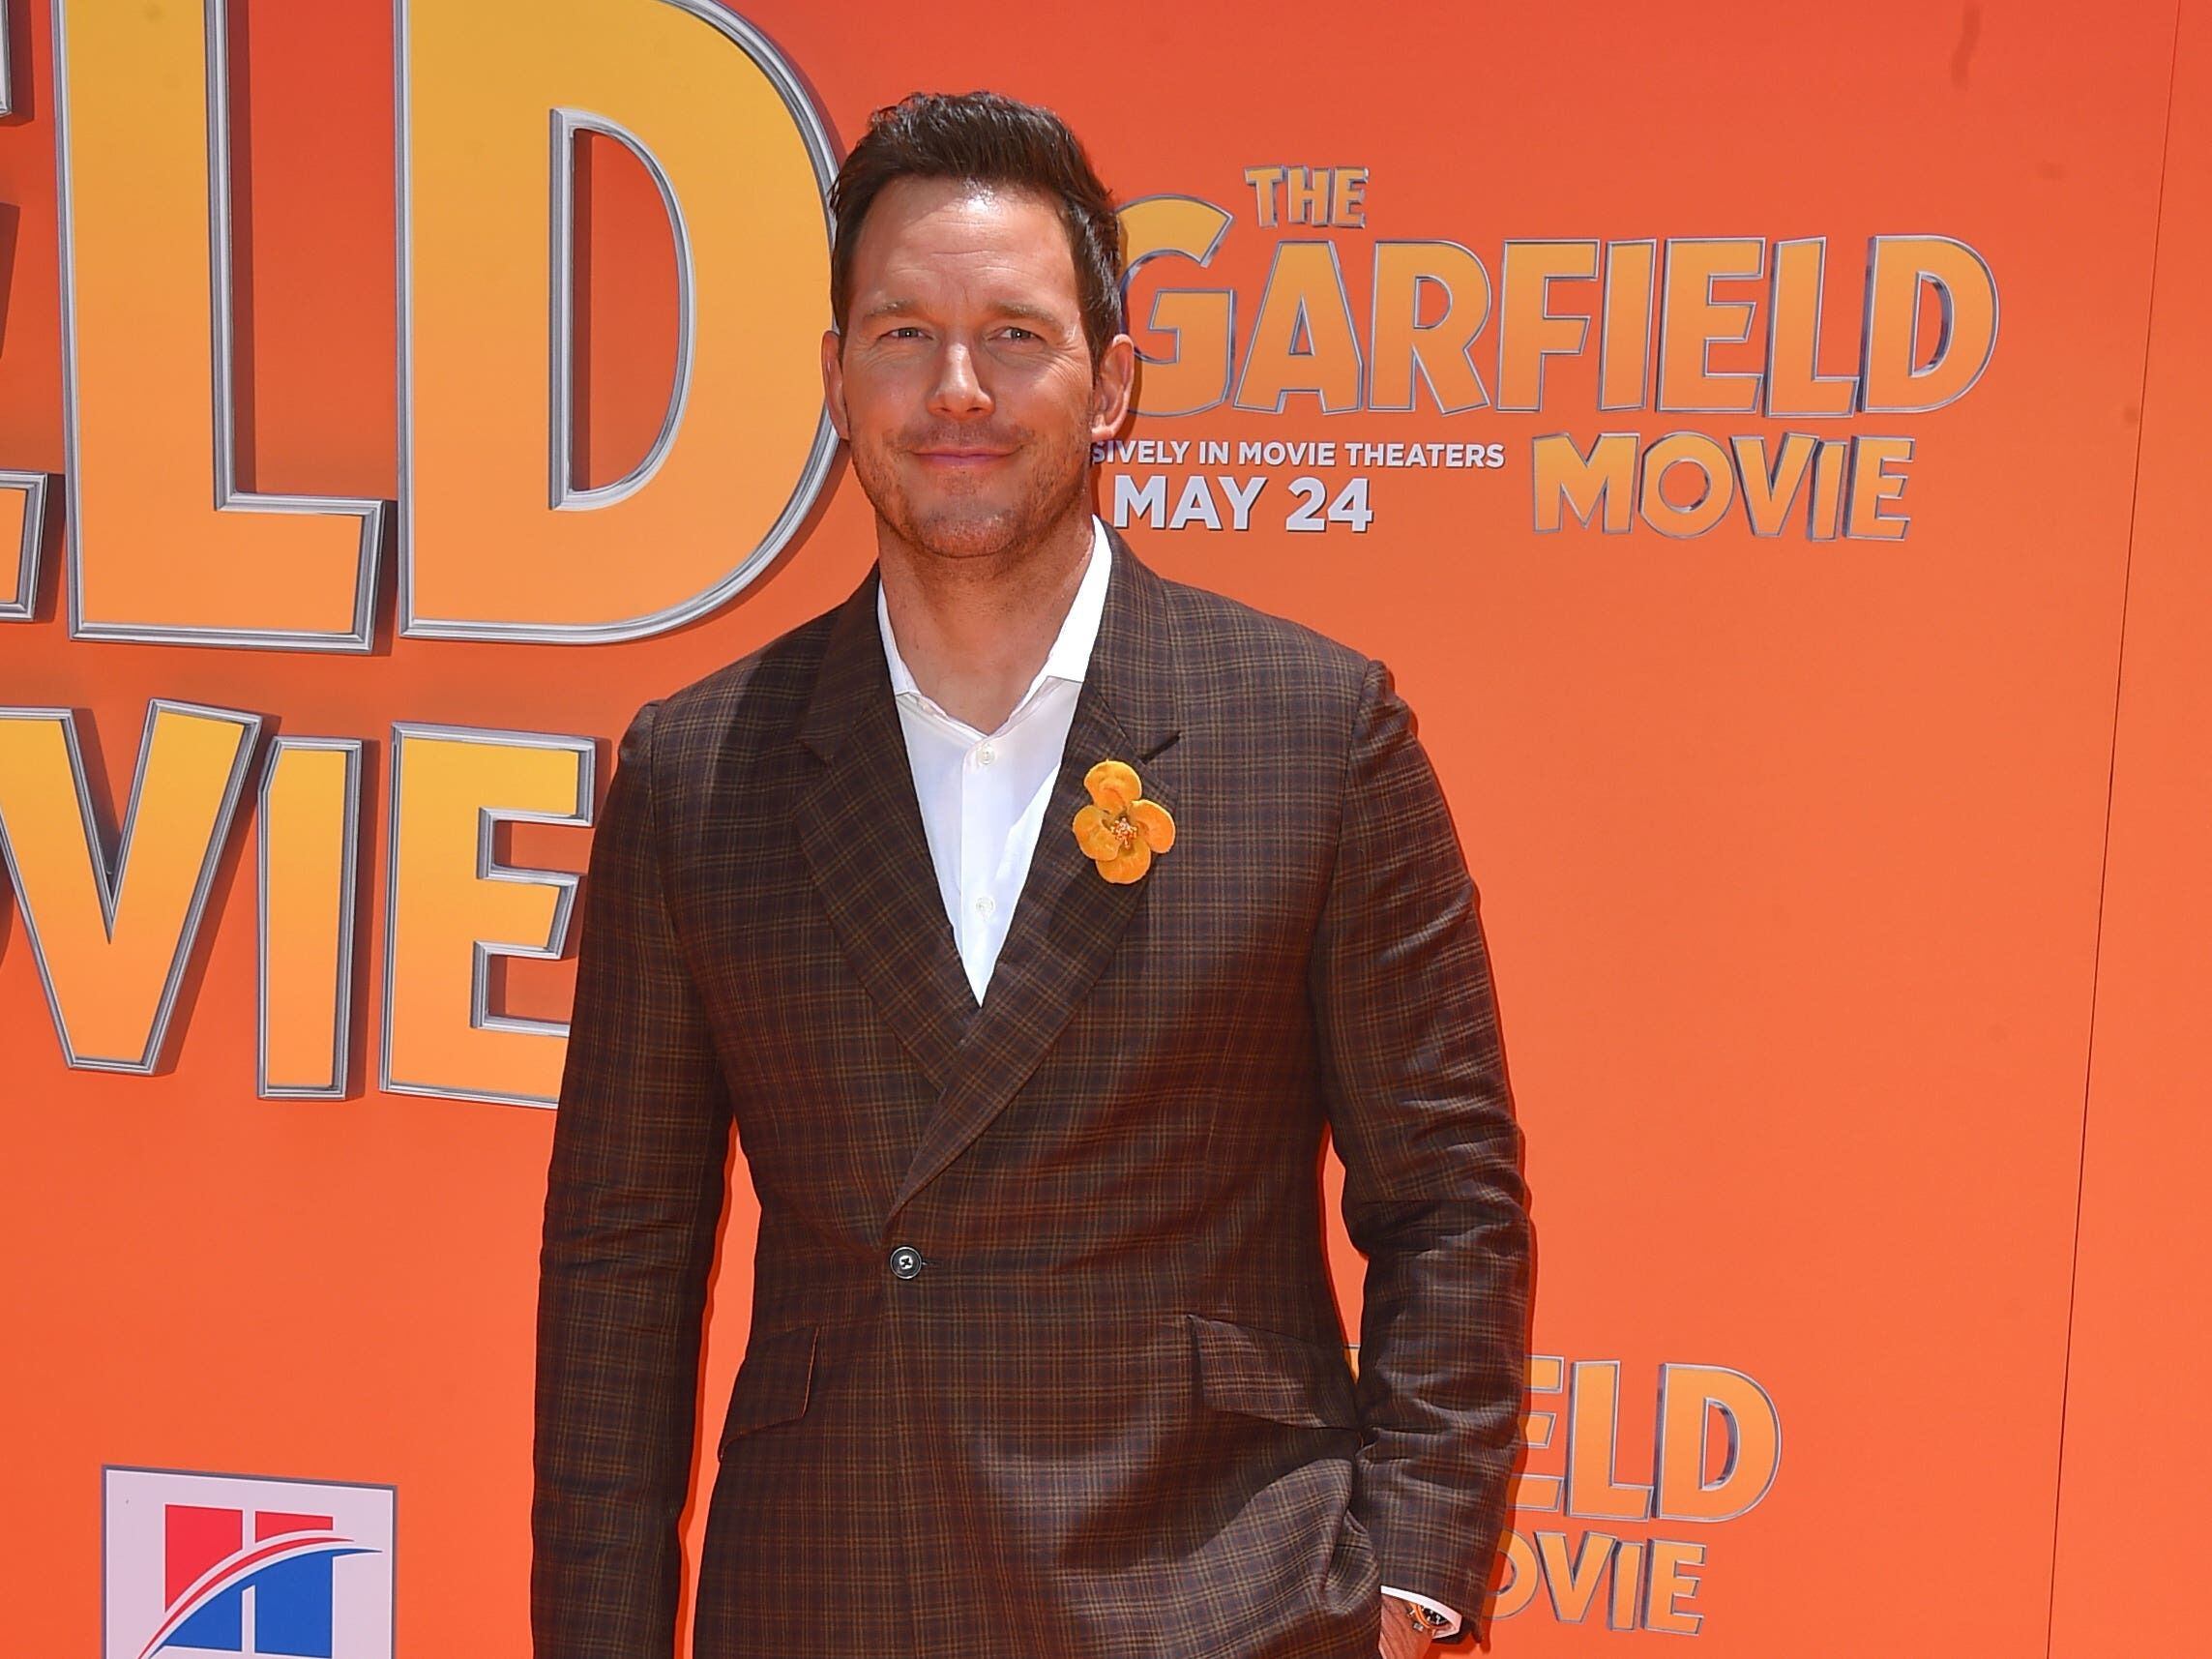 Childhood Garfield fan Chris Pratt says being picked to star in film ‘surreal’